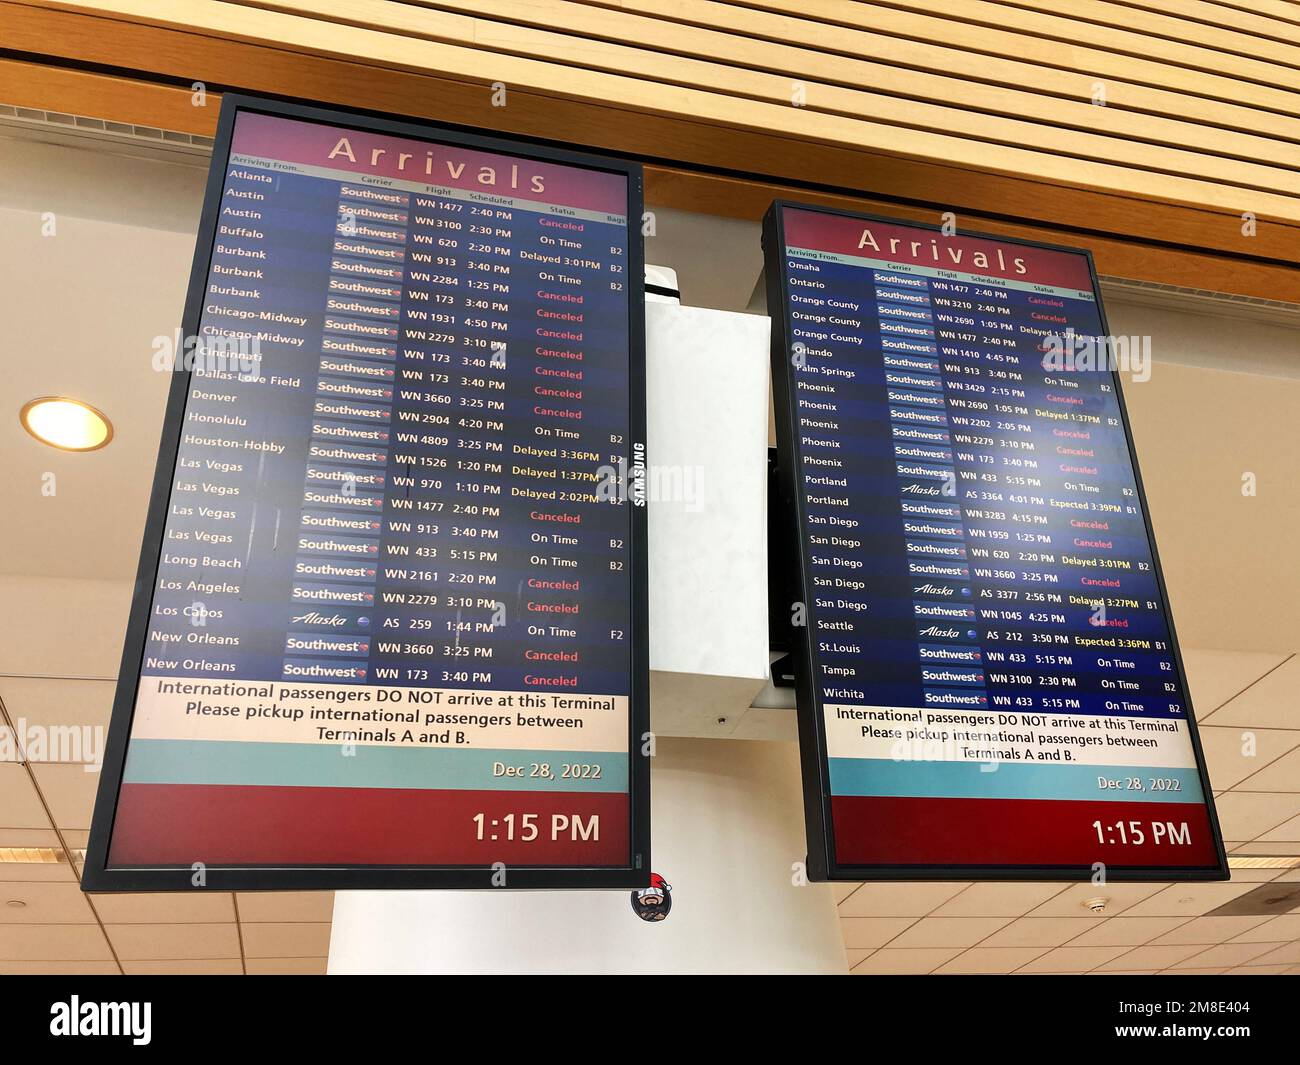 Airport arrival timetable information board displays delayed or canceled flights at San Jose International airport. - San Jose, California, USA - Dece Stock Photo